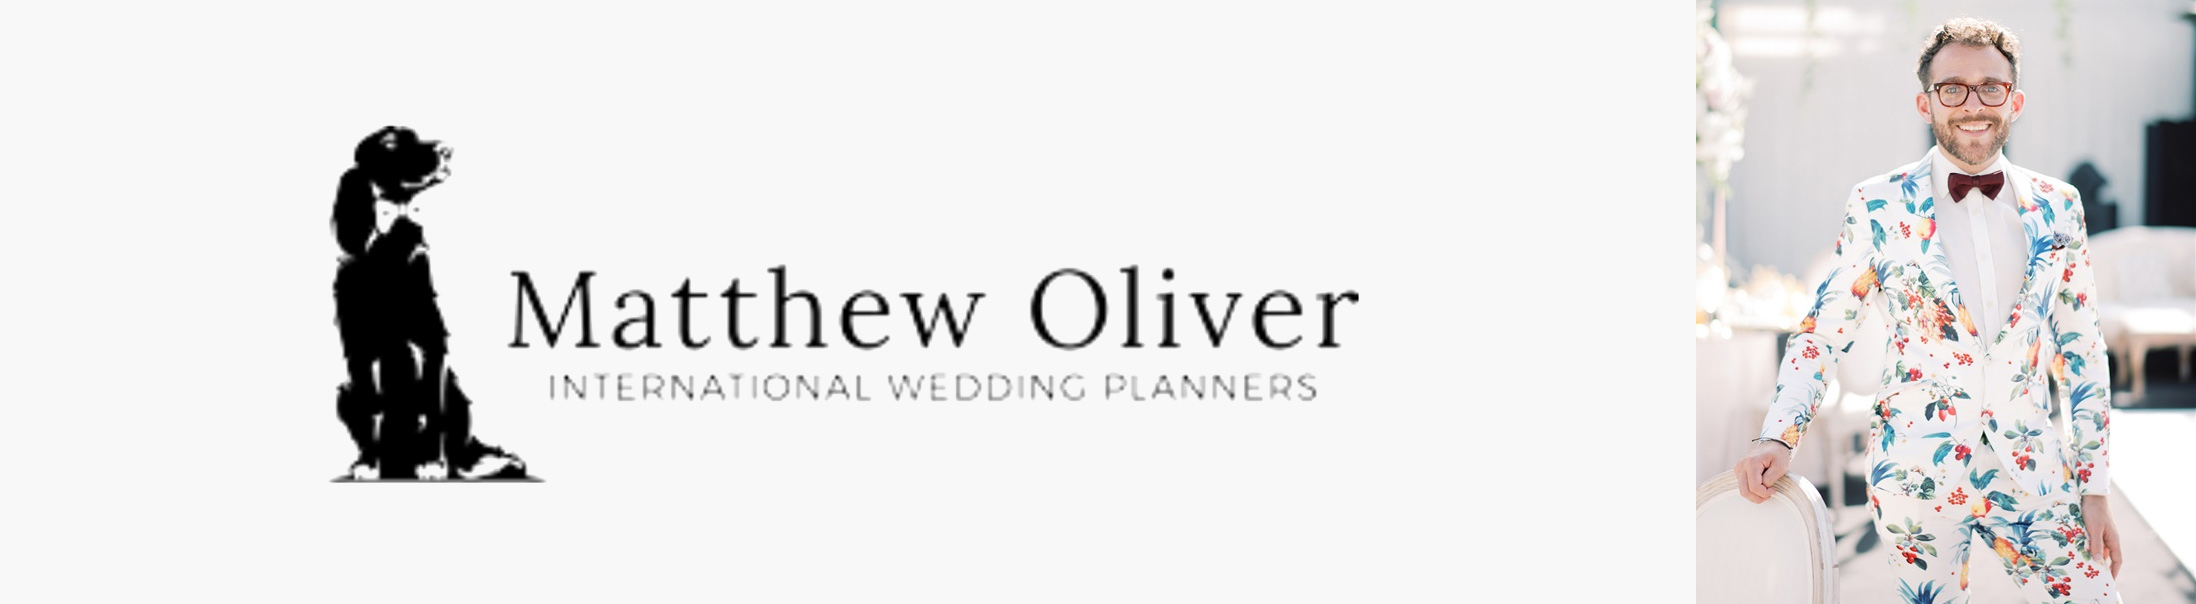 Top UK Wedding Planners - Matthew Oliver Weddings